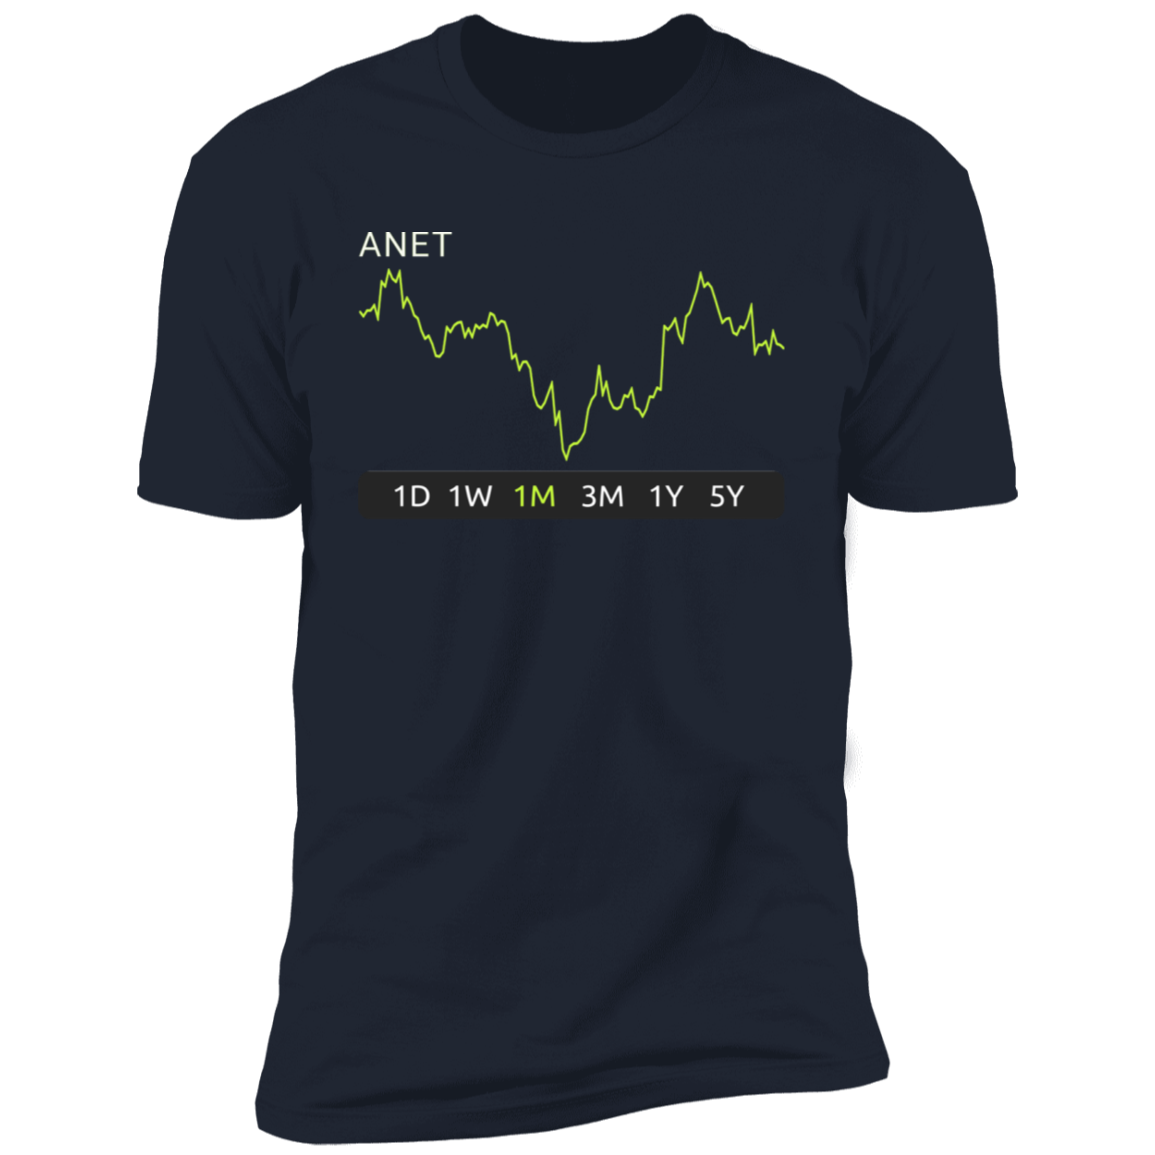 ANET Stock 1m Premium T-Shirt